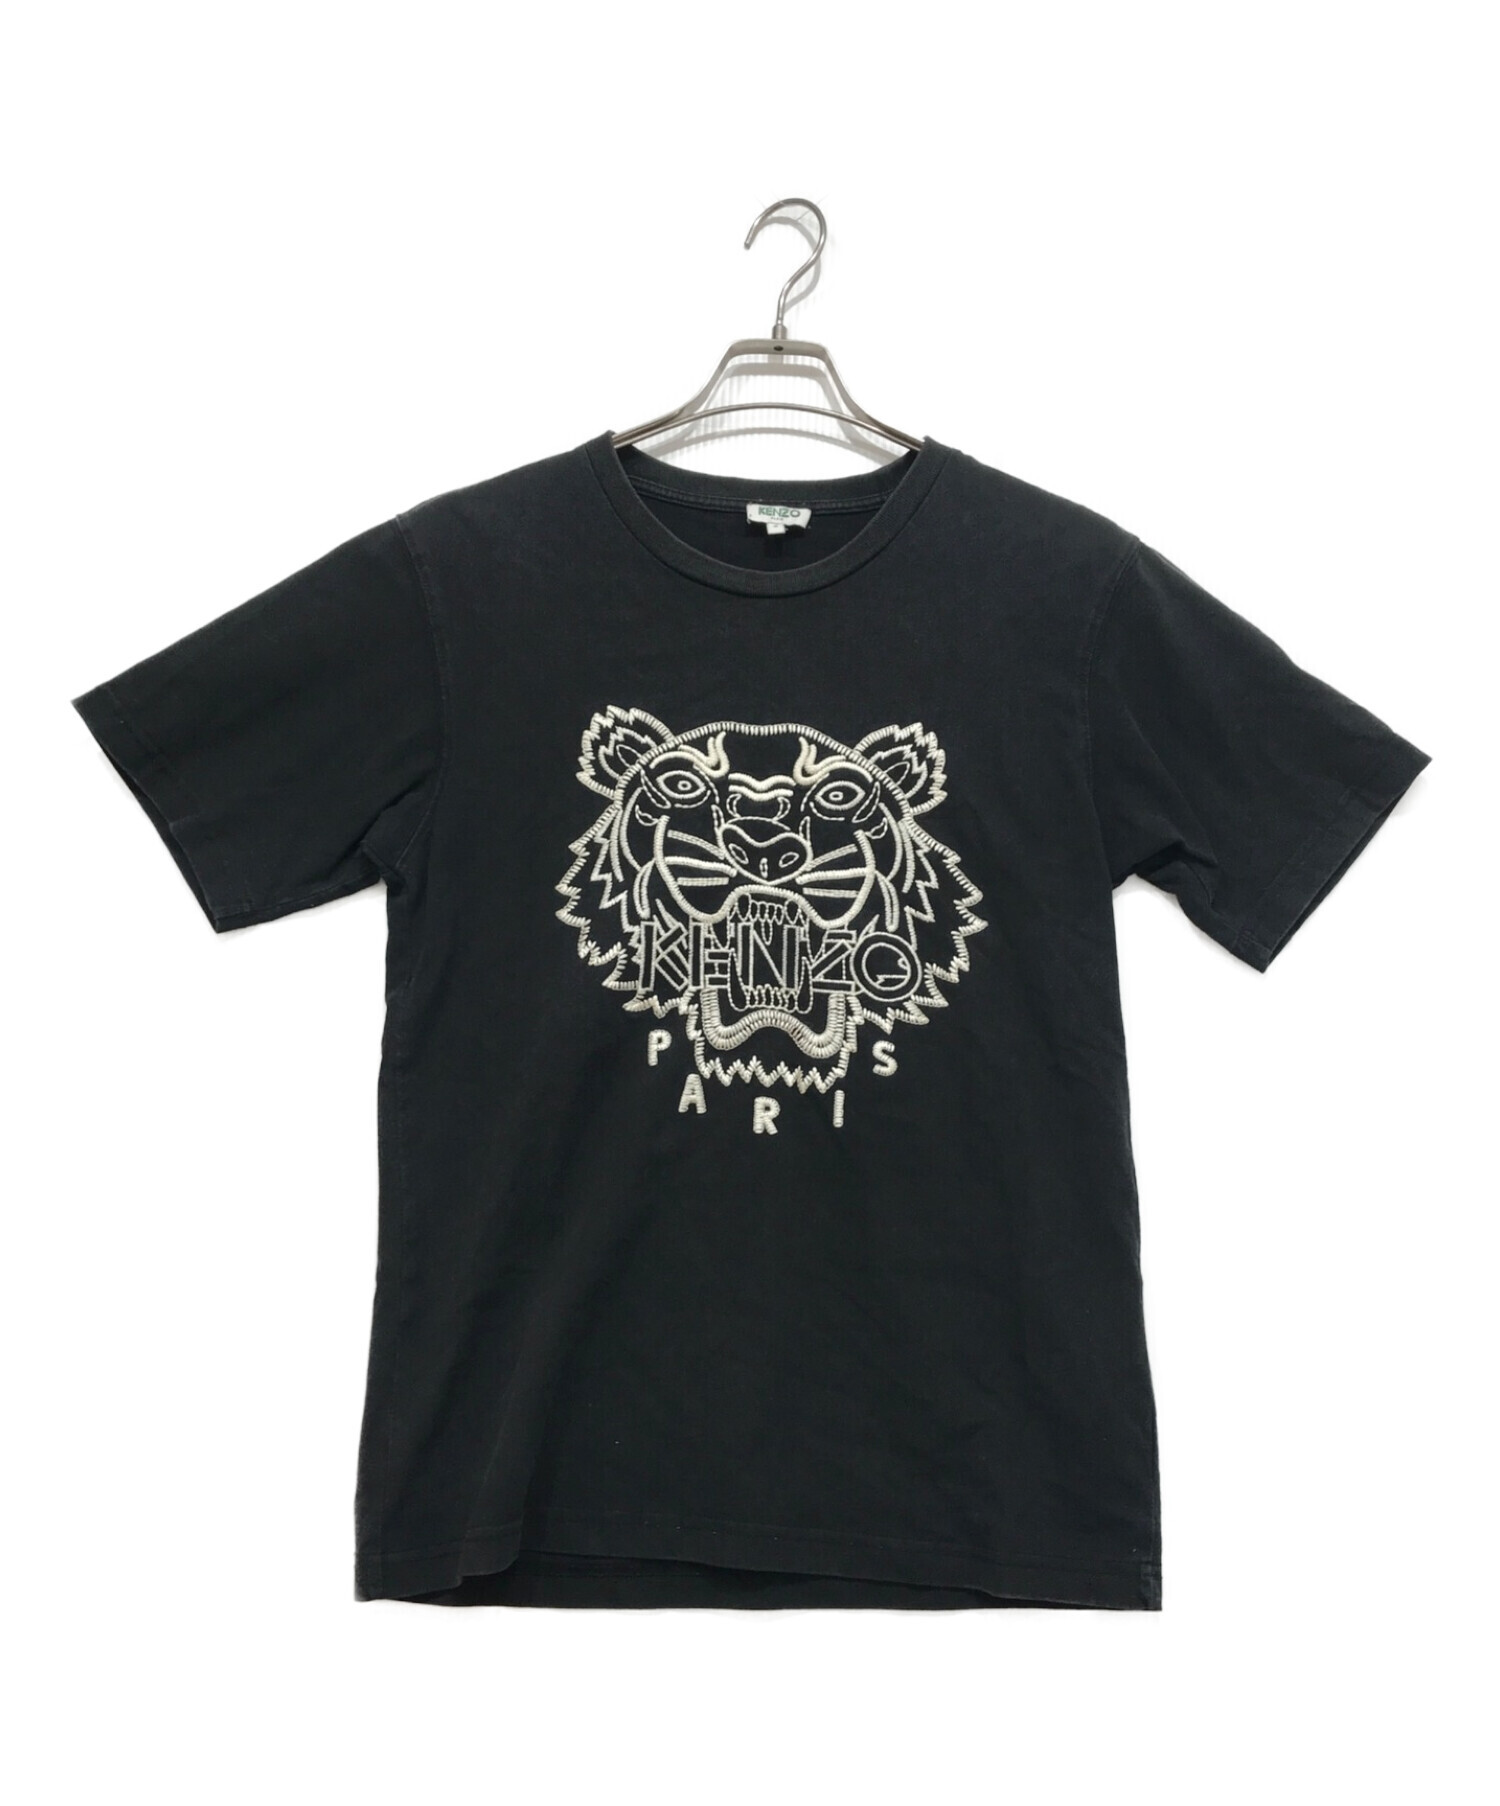 KENZO (ケンゾー) タイガー刺繍Tシャツ ブラック サイズ:S